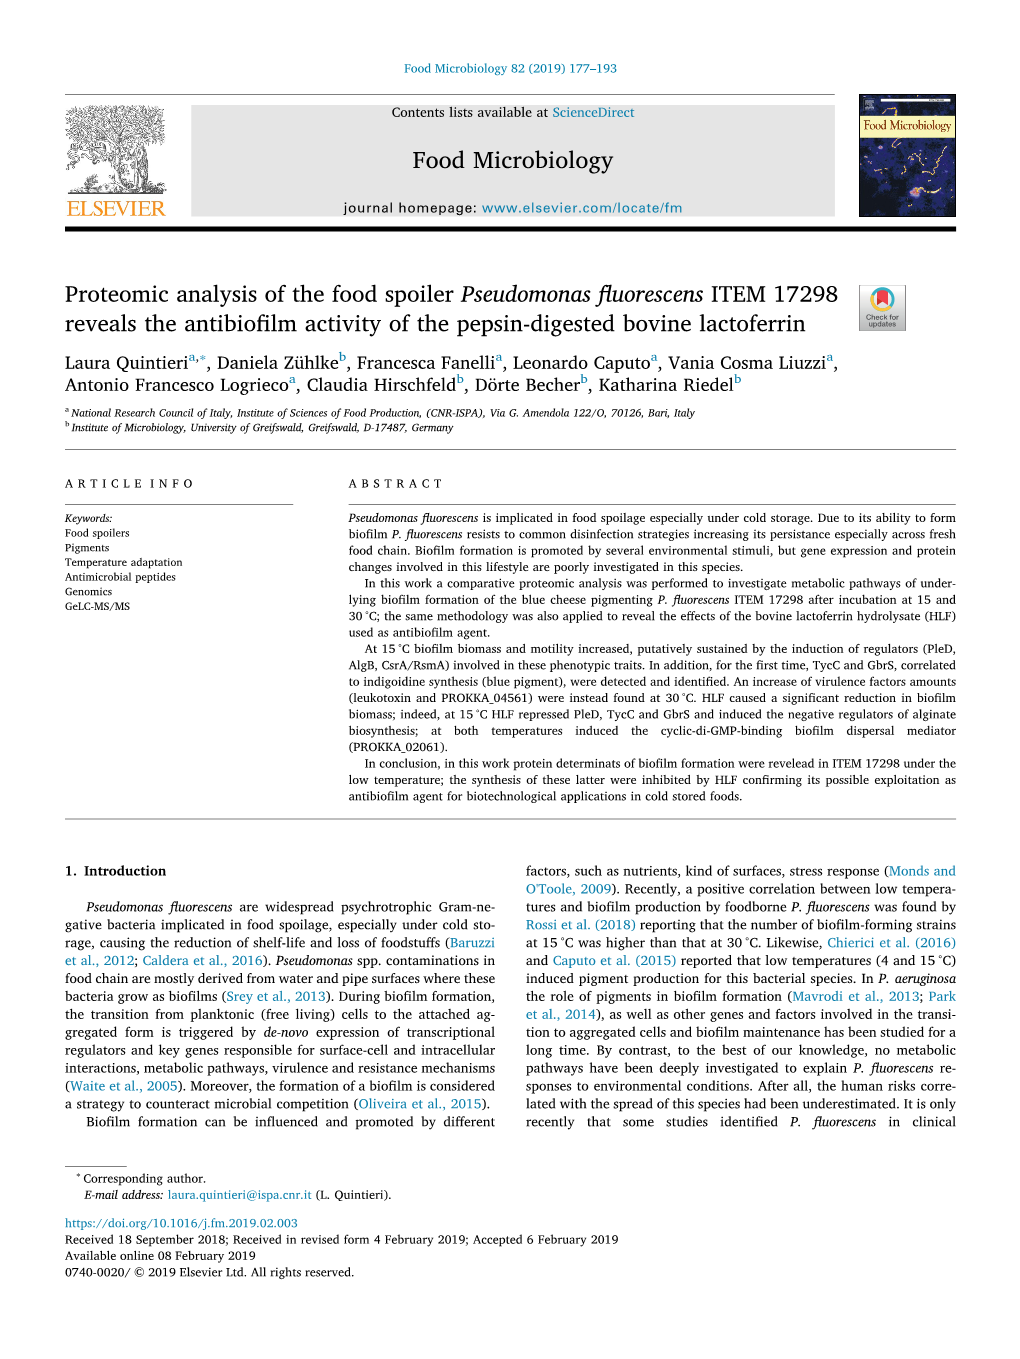 Food Microbiology Proteomic Analysis of the Food Spoiler Pseudomonas Fluorescens ITEM 17298 Reveals the Antibiofilm Activity Of